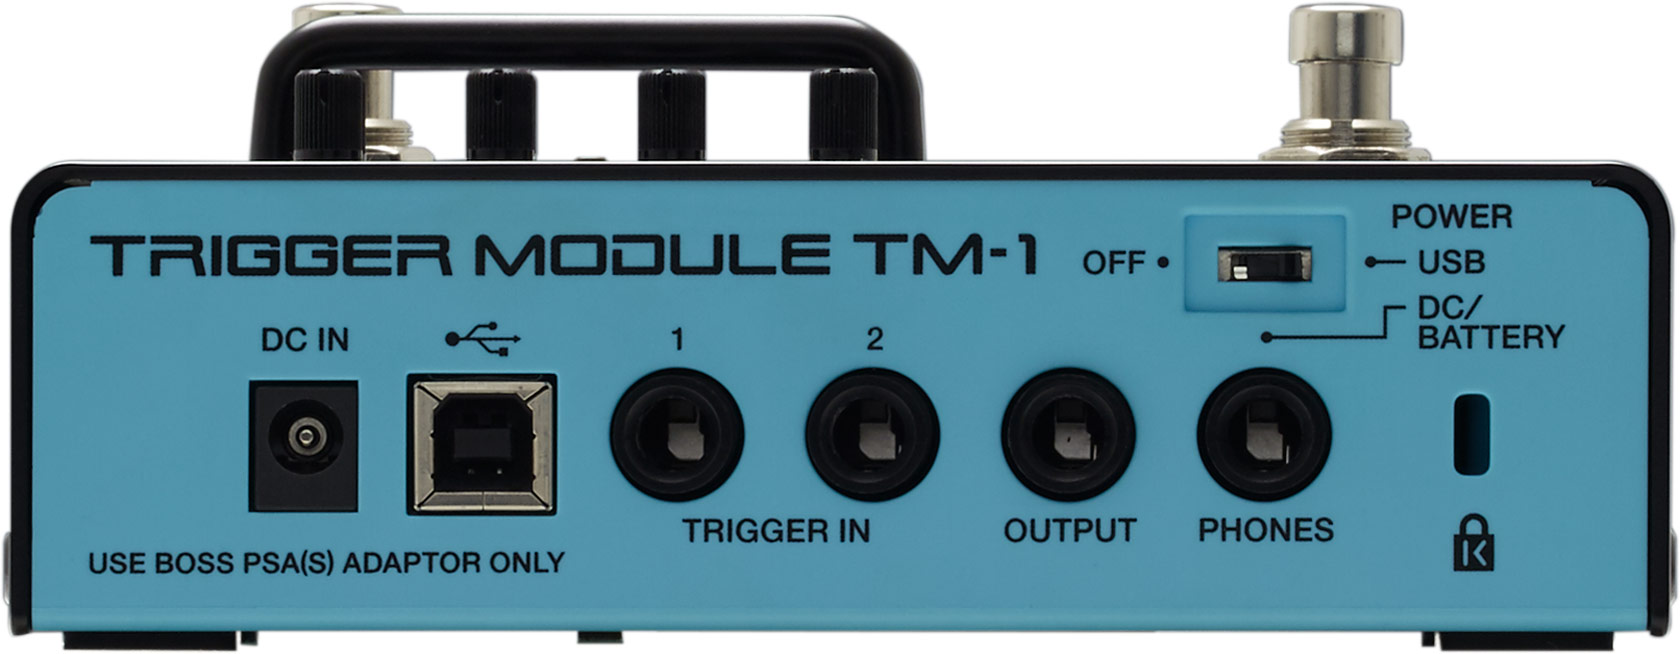 Roland Tm-1 Trigger Module - Trigger para batería electrónica - Variation 2